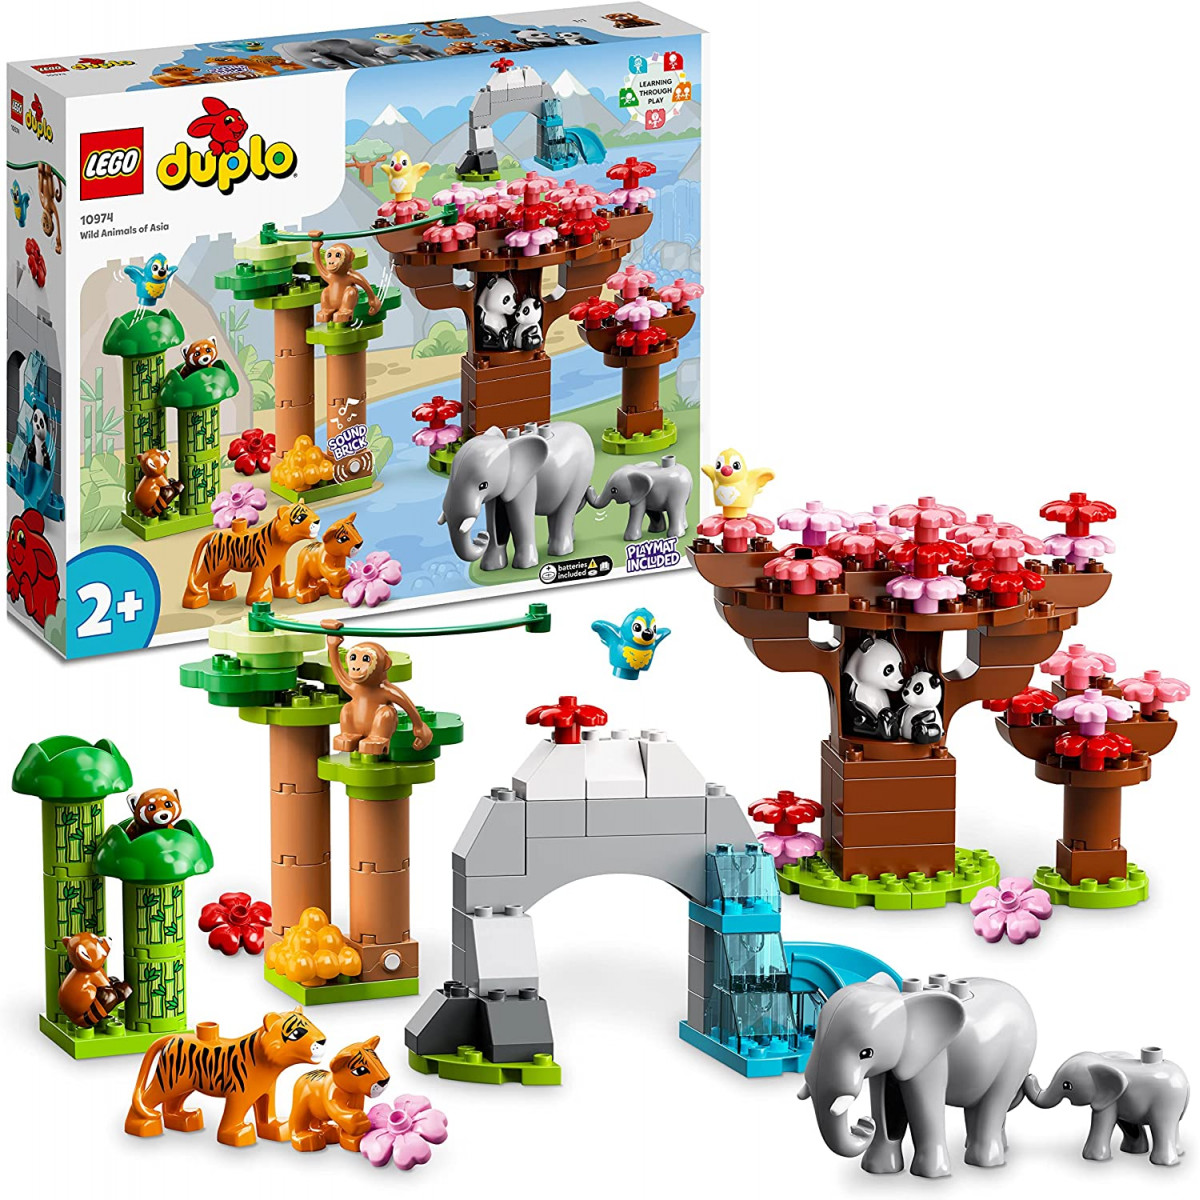 LEGO DUPLO 10974 - Wild Animals of Asia